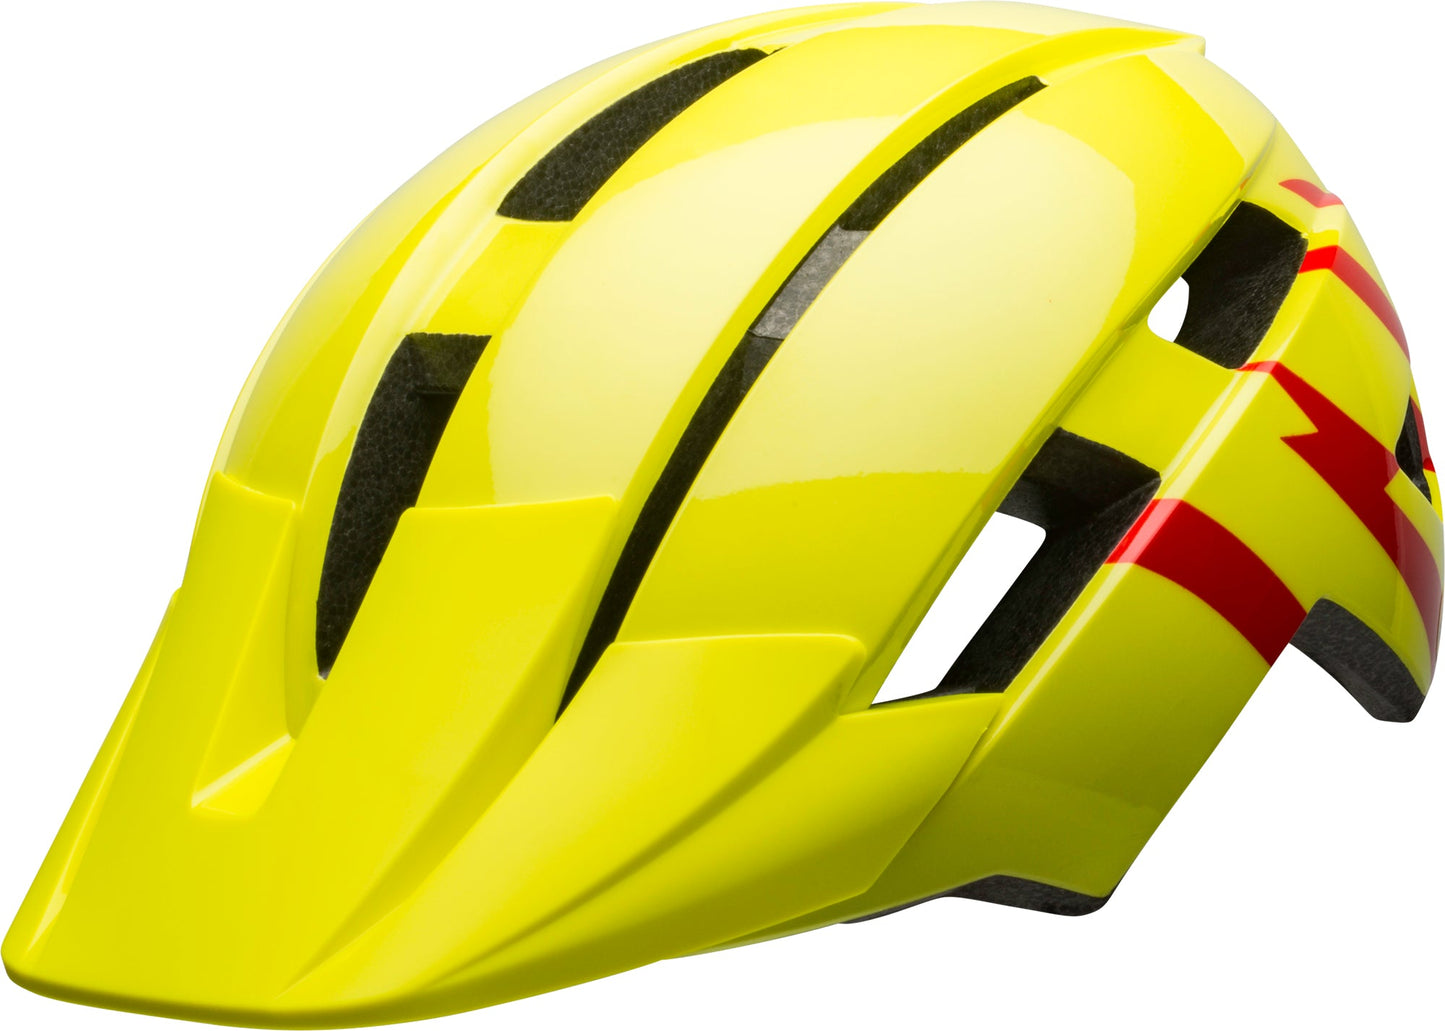 BELL Sidetrack II 小童/中童頭盔/ Sidetrack II Kid Helmet